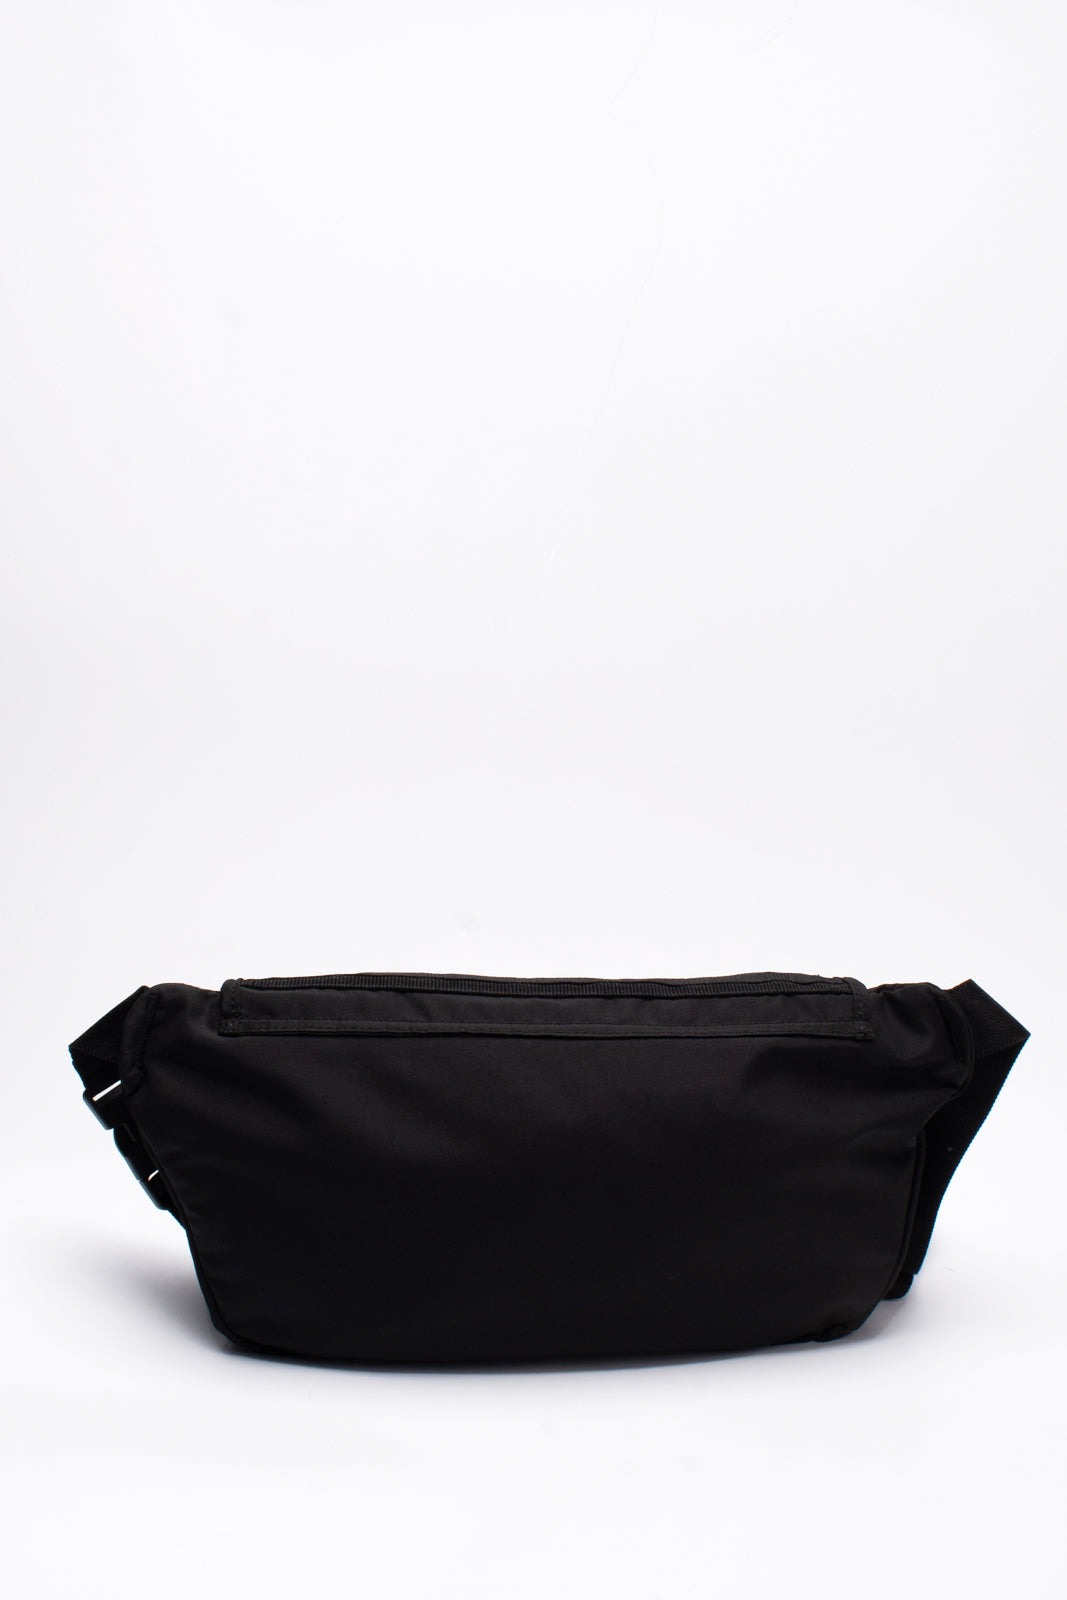 CALVIN KLEIN black polyester Messenger Bag – To Be Outlet